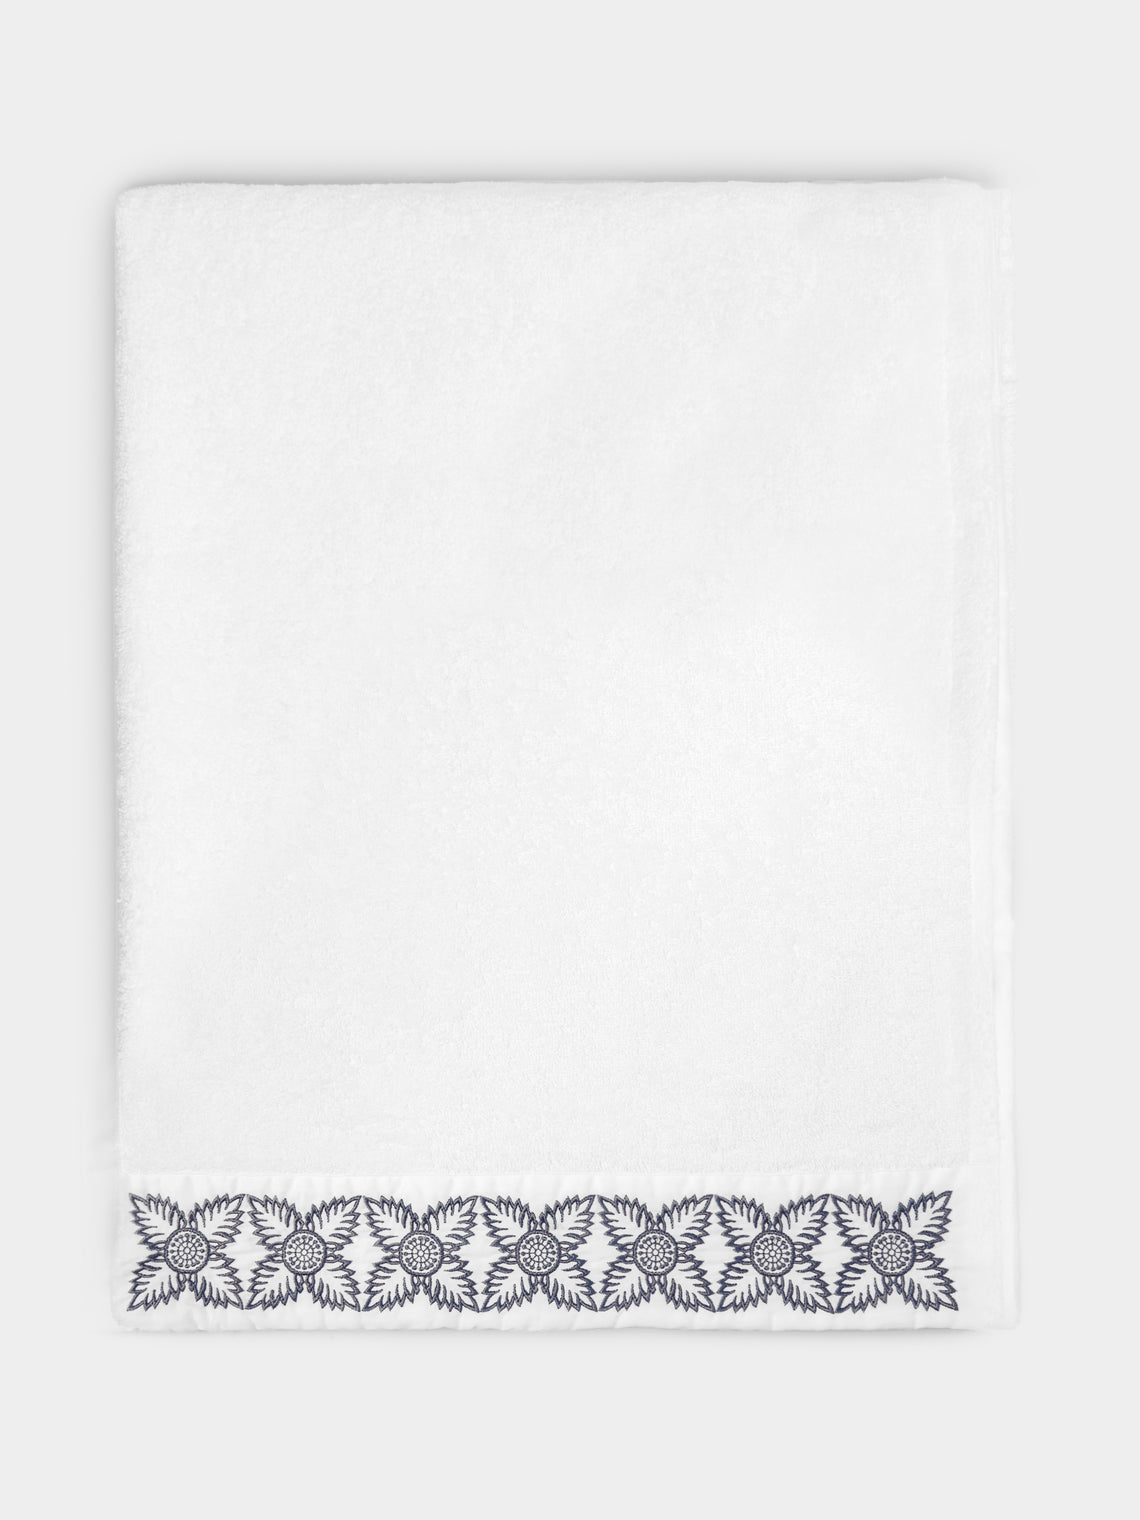 Loretta Caponi - Foliage Hand-Embroidered Cotton Bath Towel -  - ABASK - 